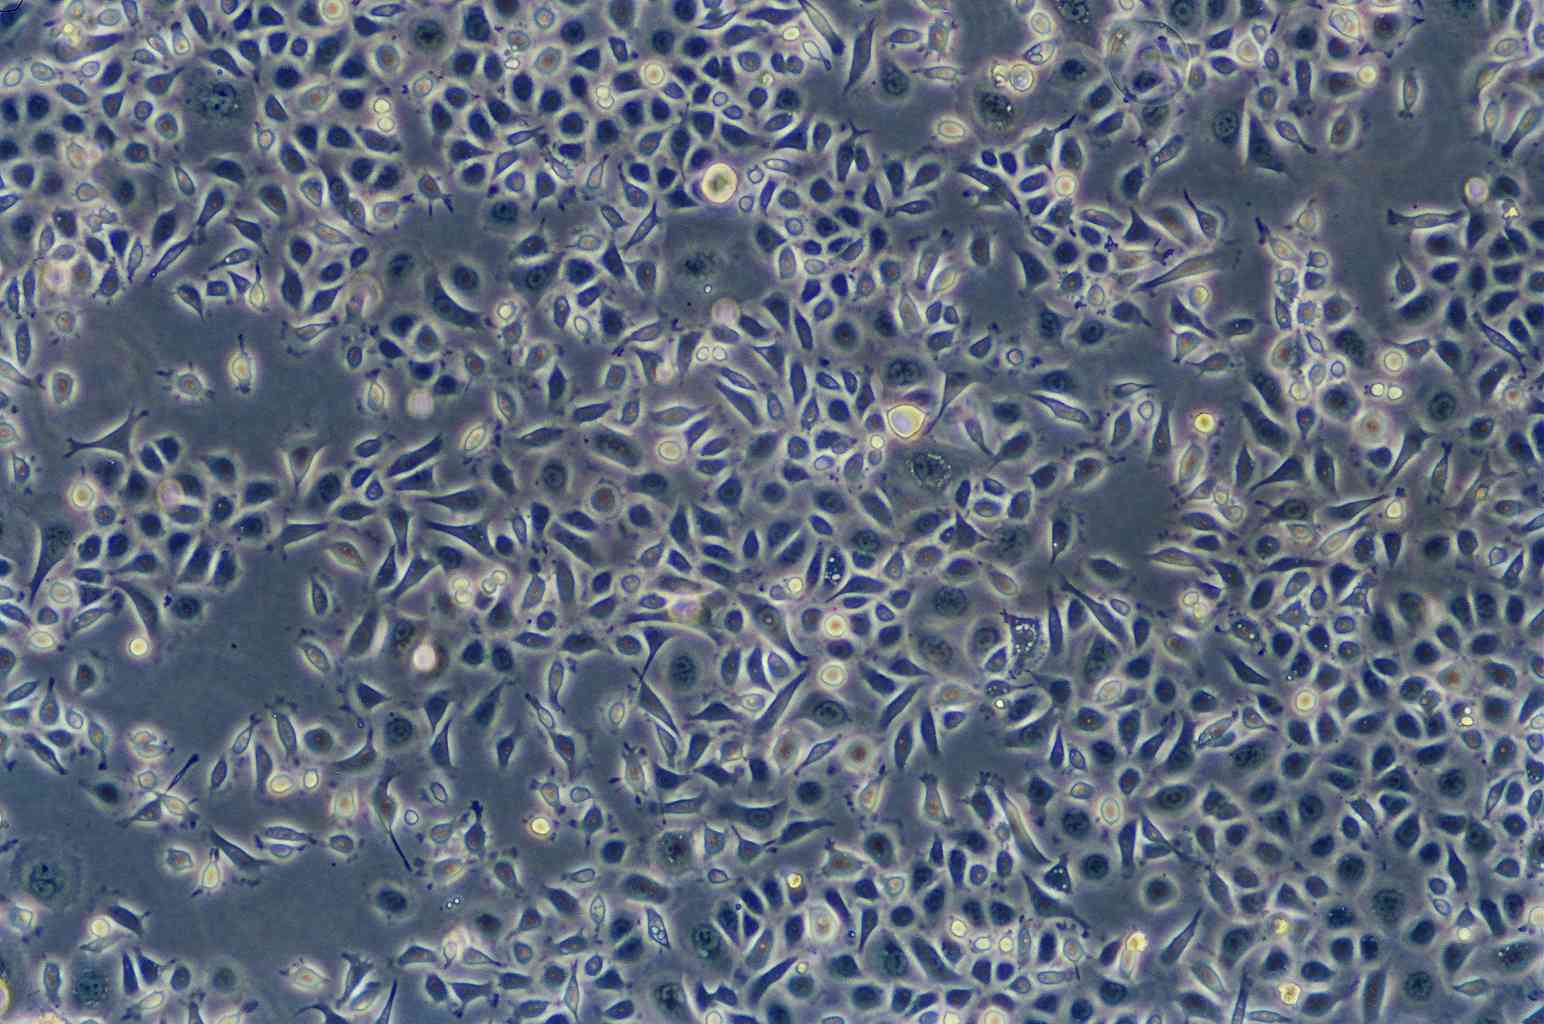 IPEC-J2 cell line猪小肠上皮细胞系